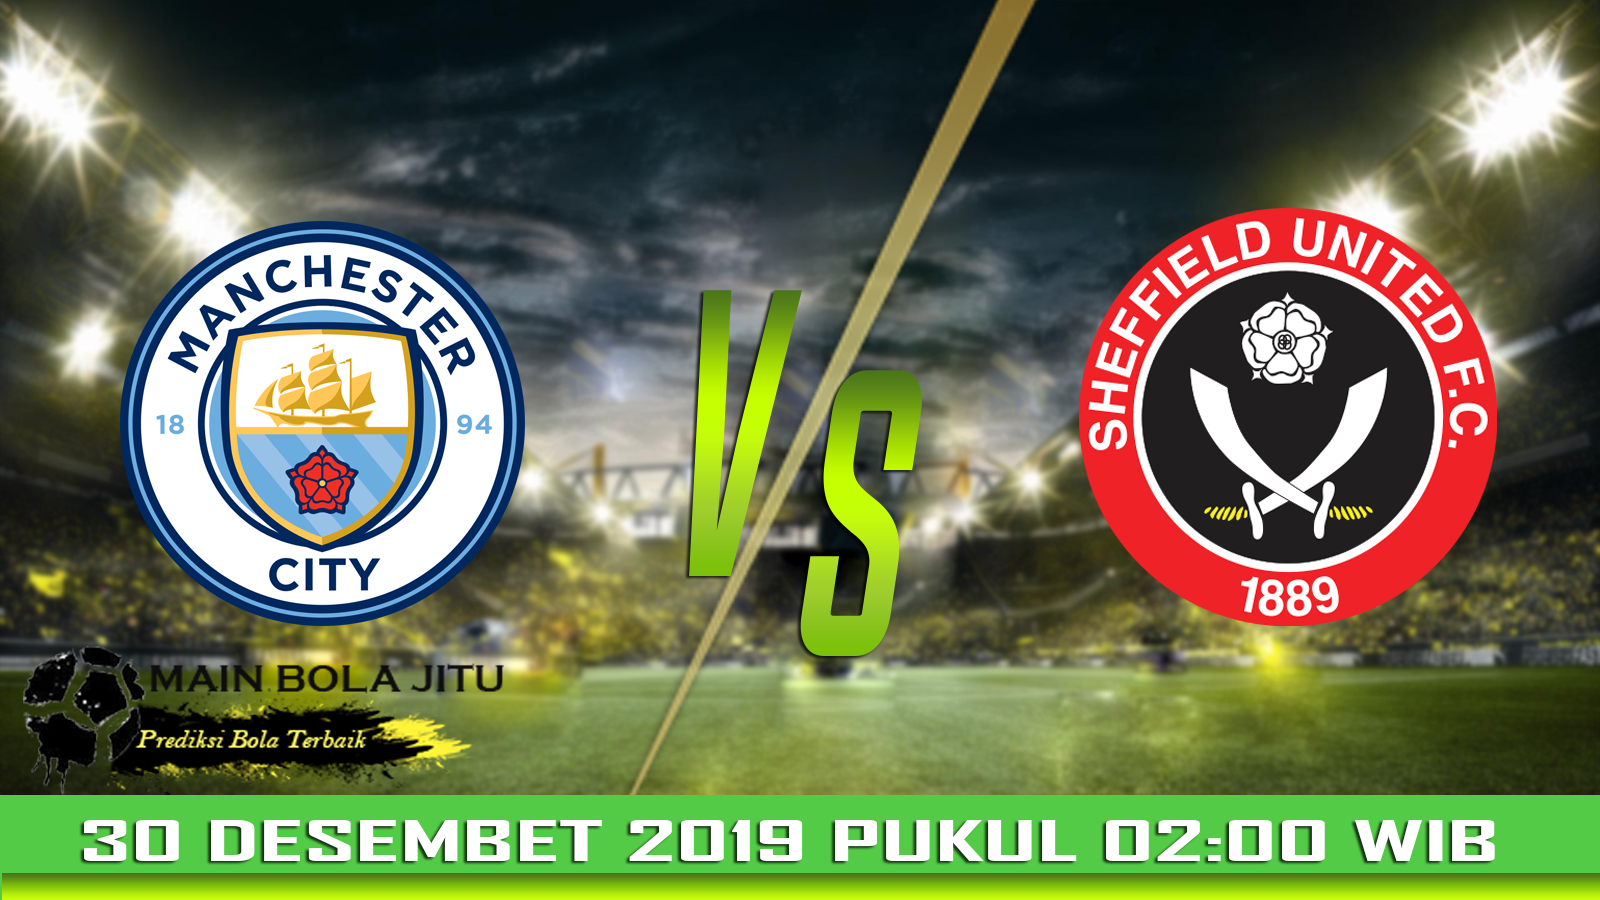 Prediksi Bola Manchester City vs Sheffield Utd tanggal 30-12-2019